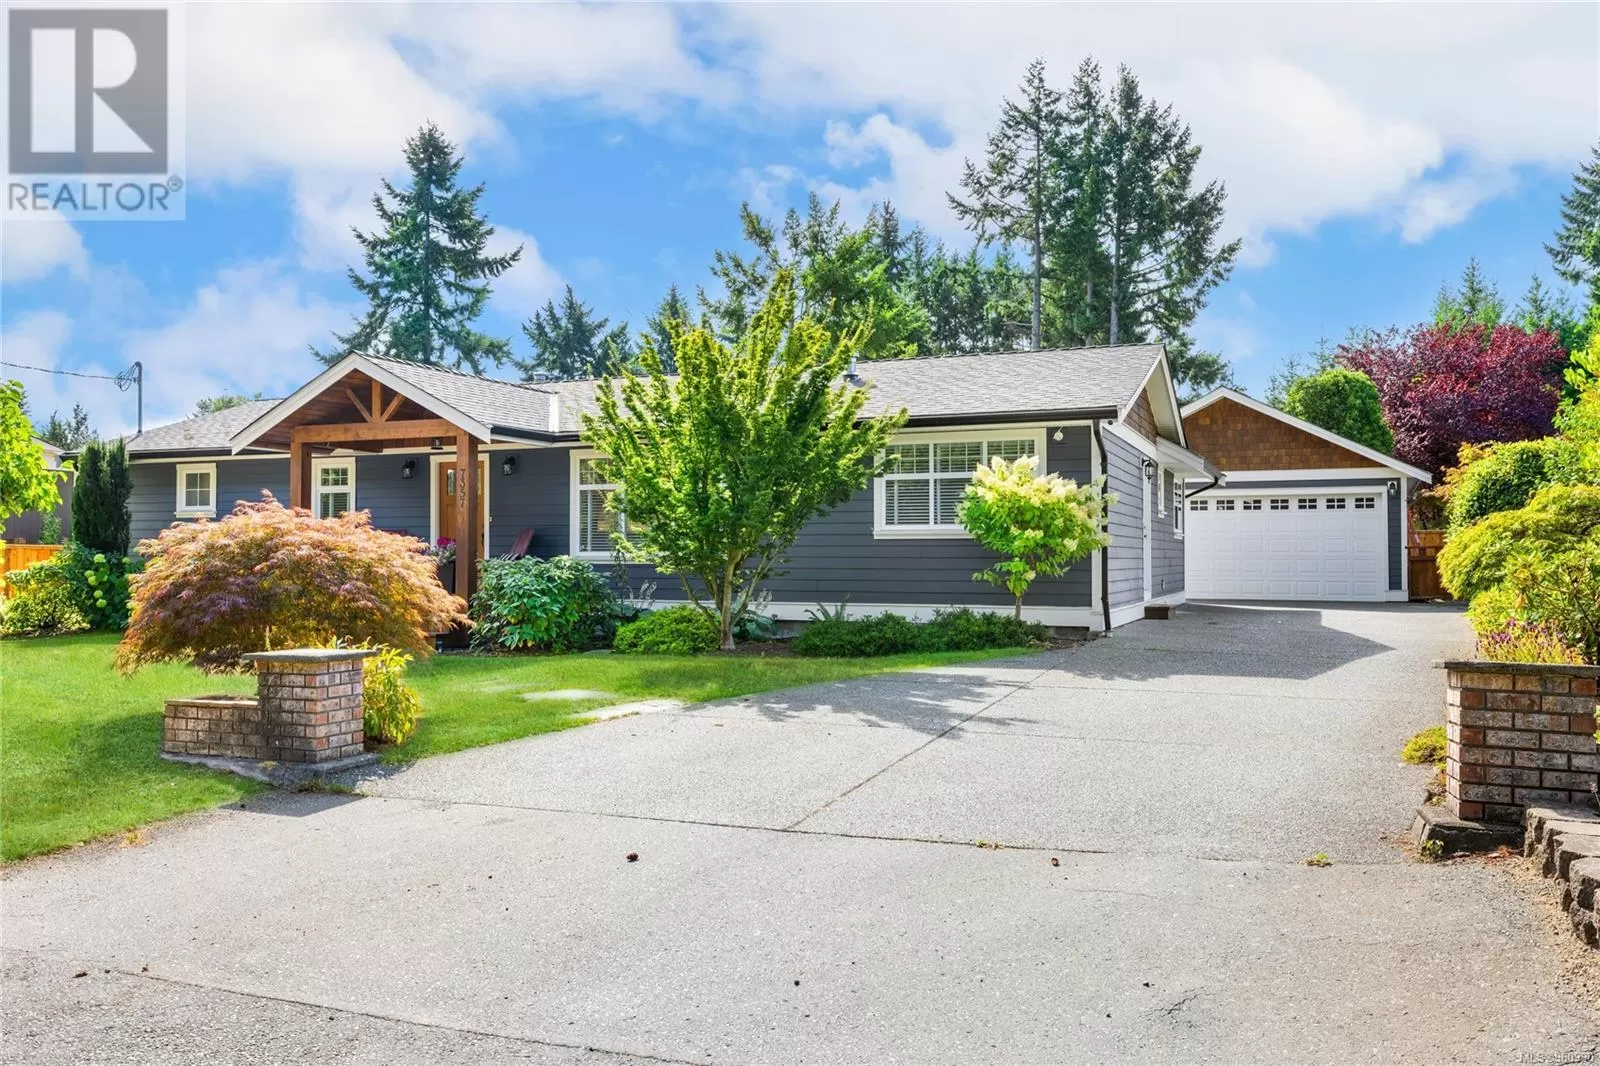 House for rent: 7357 Lantzville Rd, Lantzville, British Columbia V0R 2H0